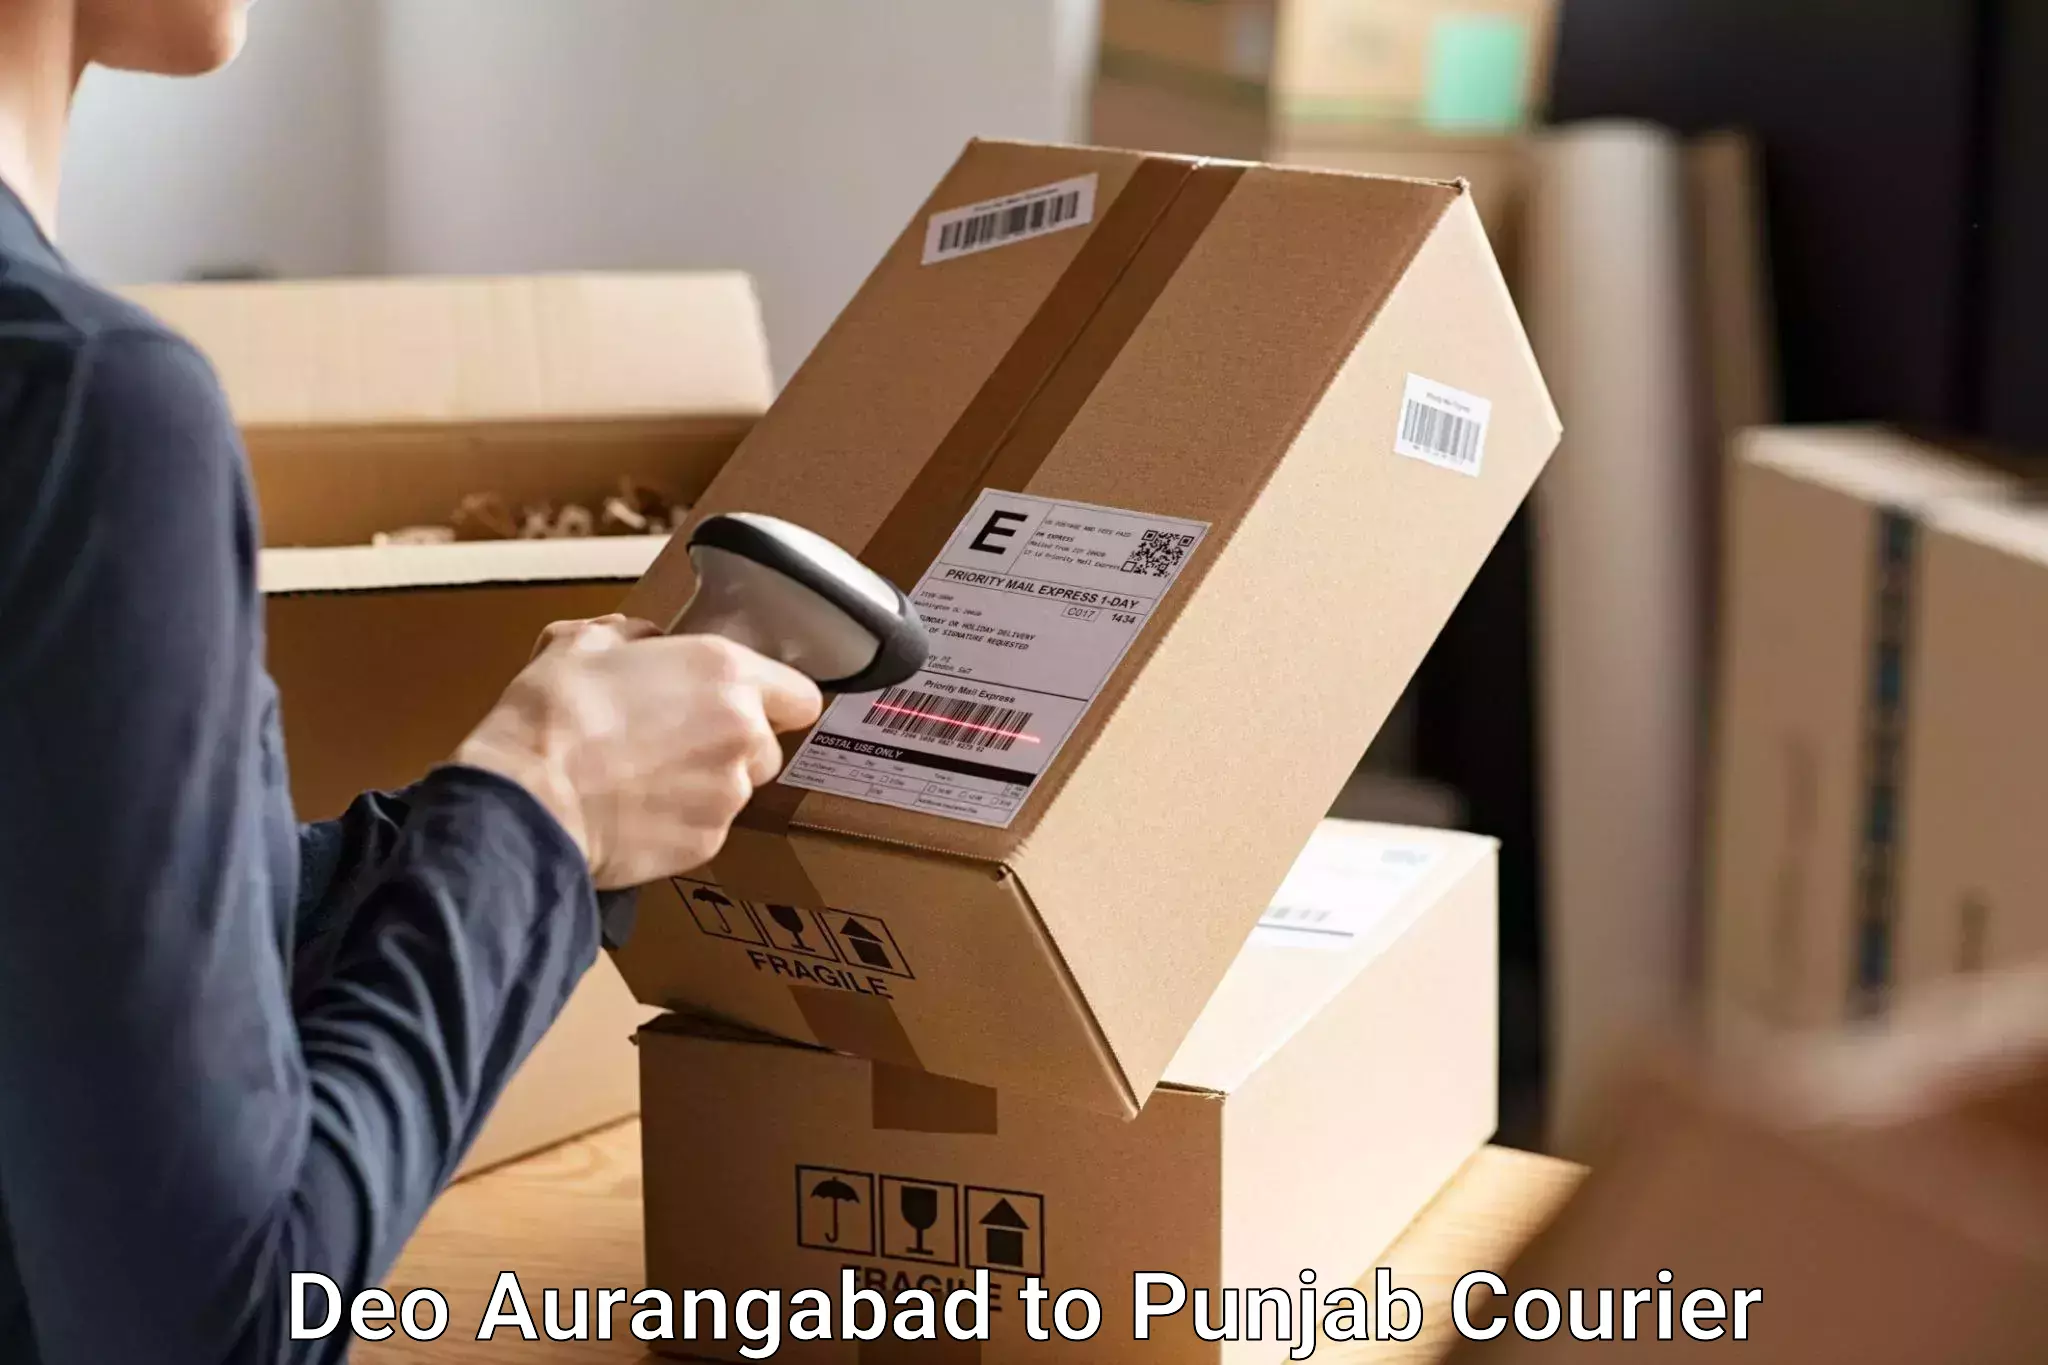 Baggage relocation service Deo Aurangabad to Punjab